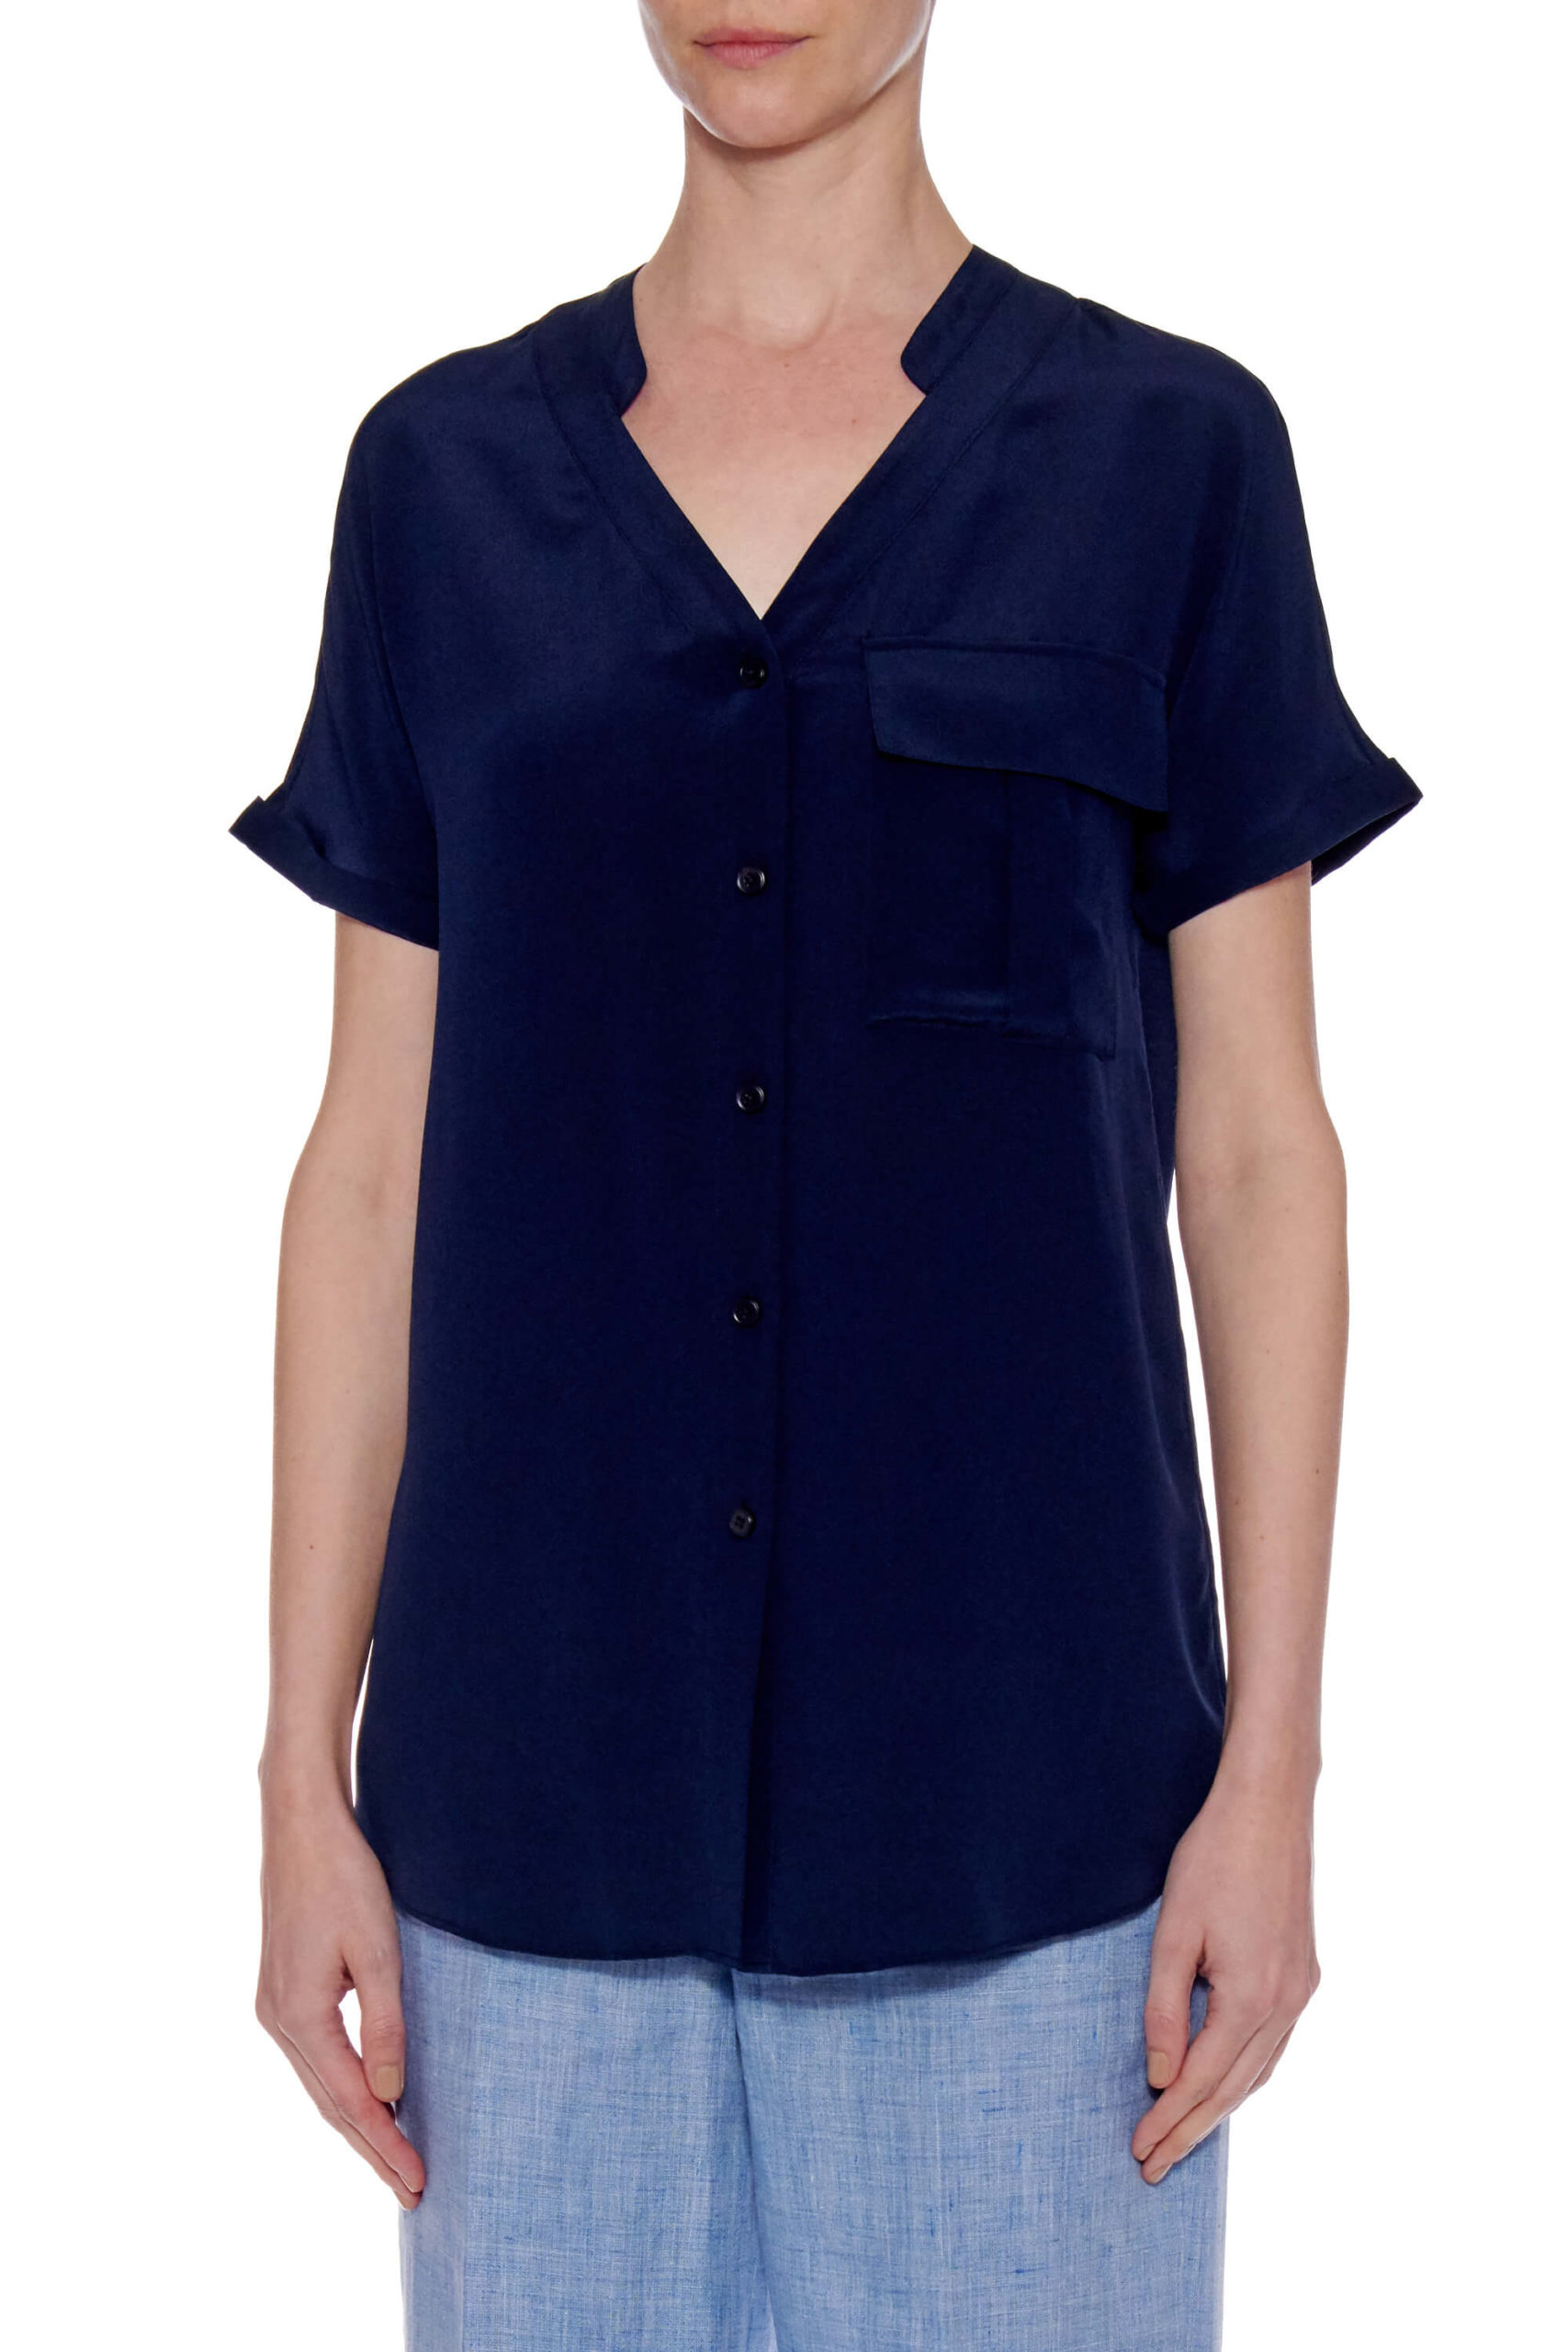 Lleida Top – Short sleeve loose fit summer blouse in navy